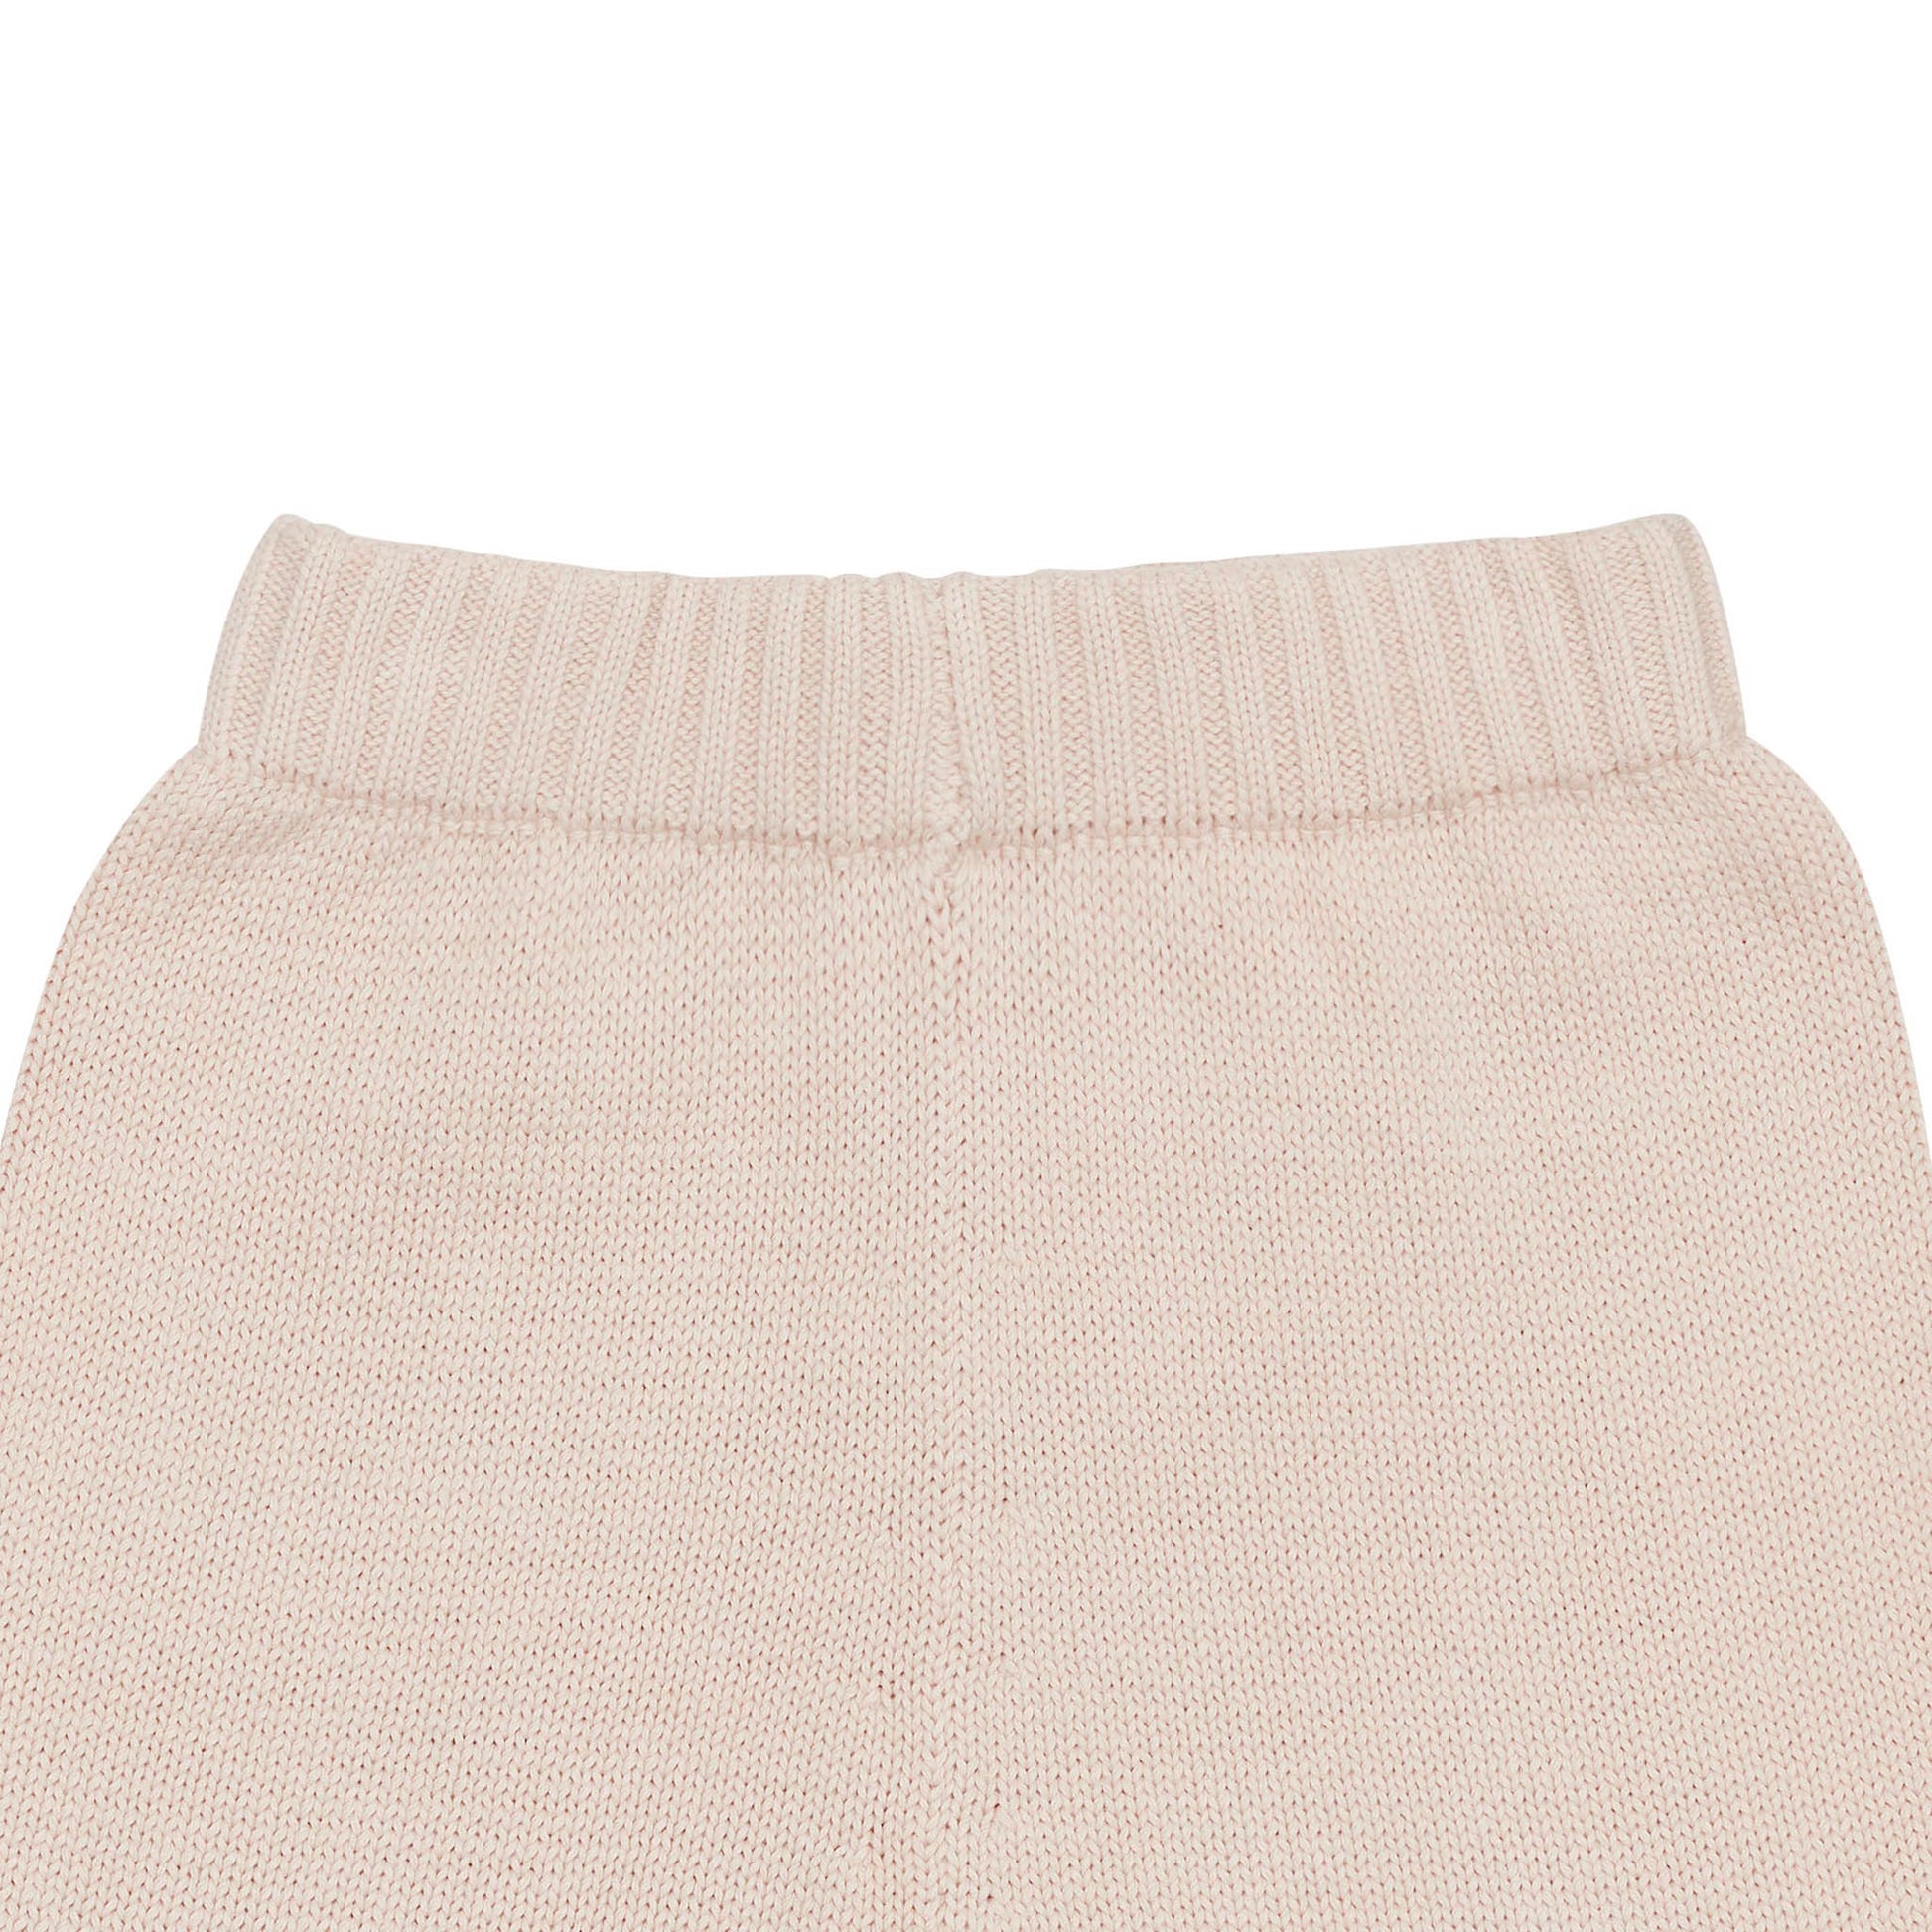 Donsje - Hose "Icta Trousers" | soft sand - Leja Concept Store